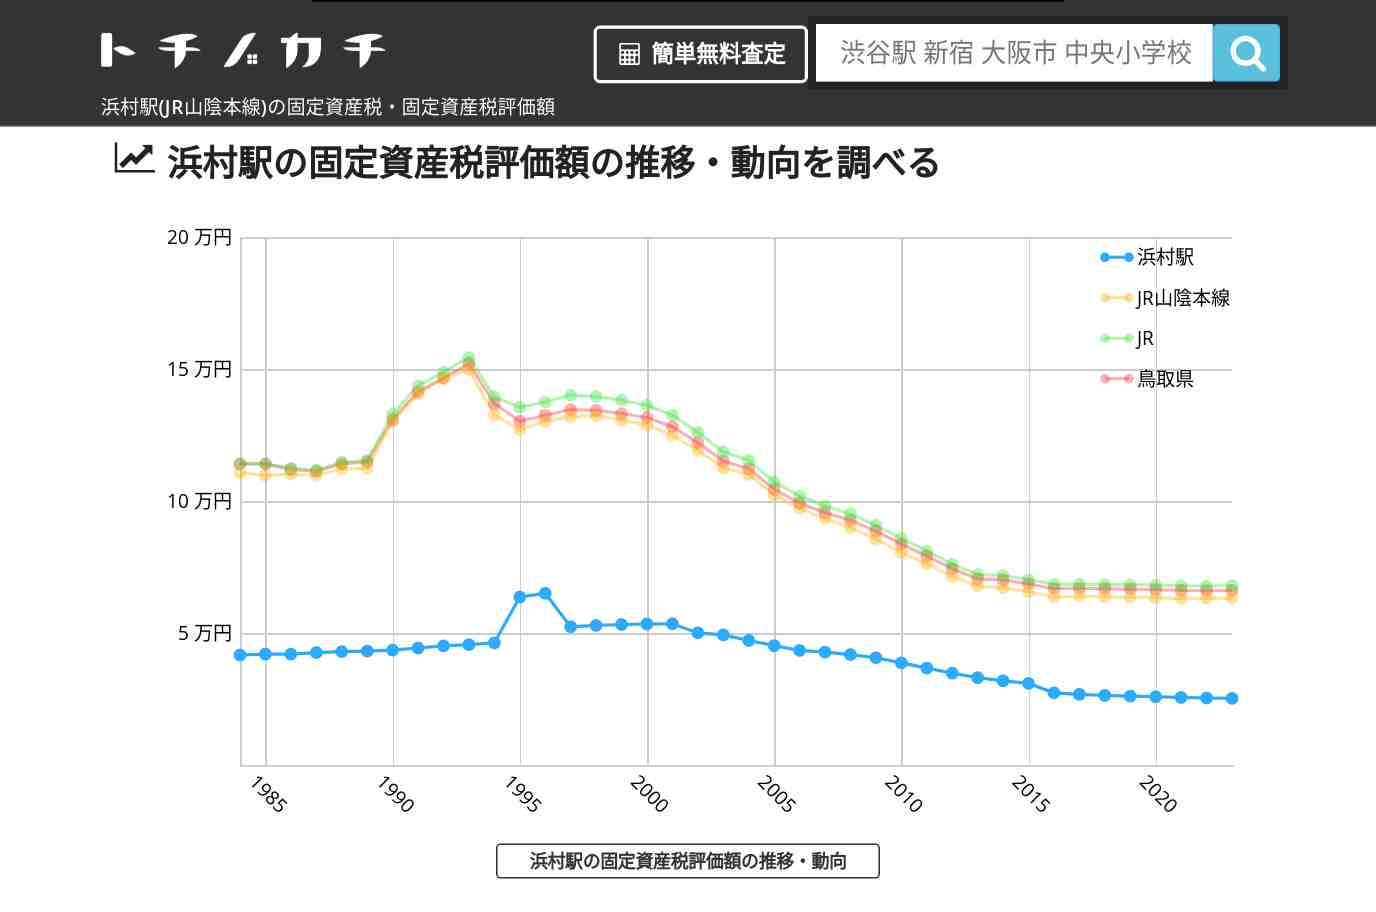 浜村駅(JR山陰本線)の固定資産税・固定資産税評価額 | トチノカチ